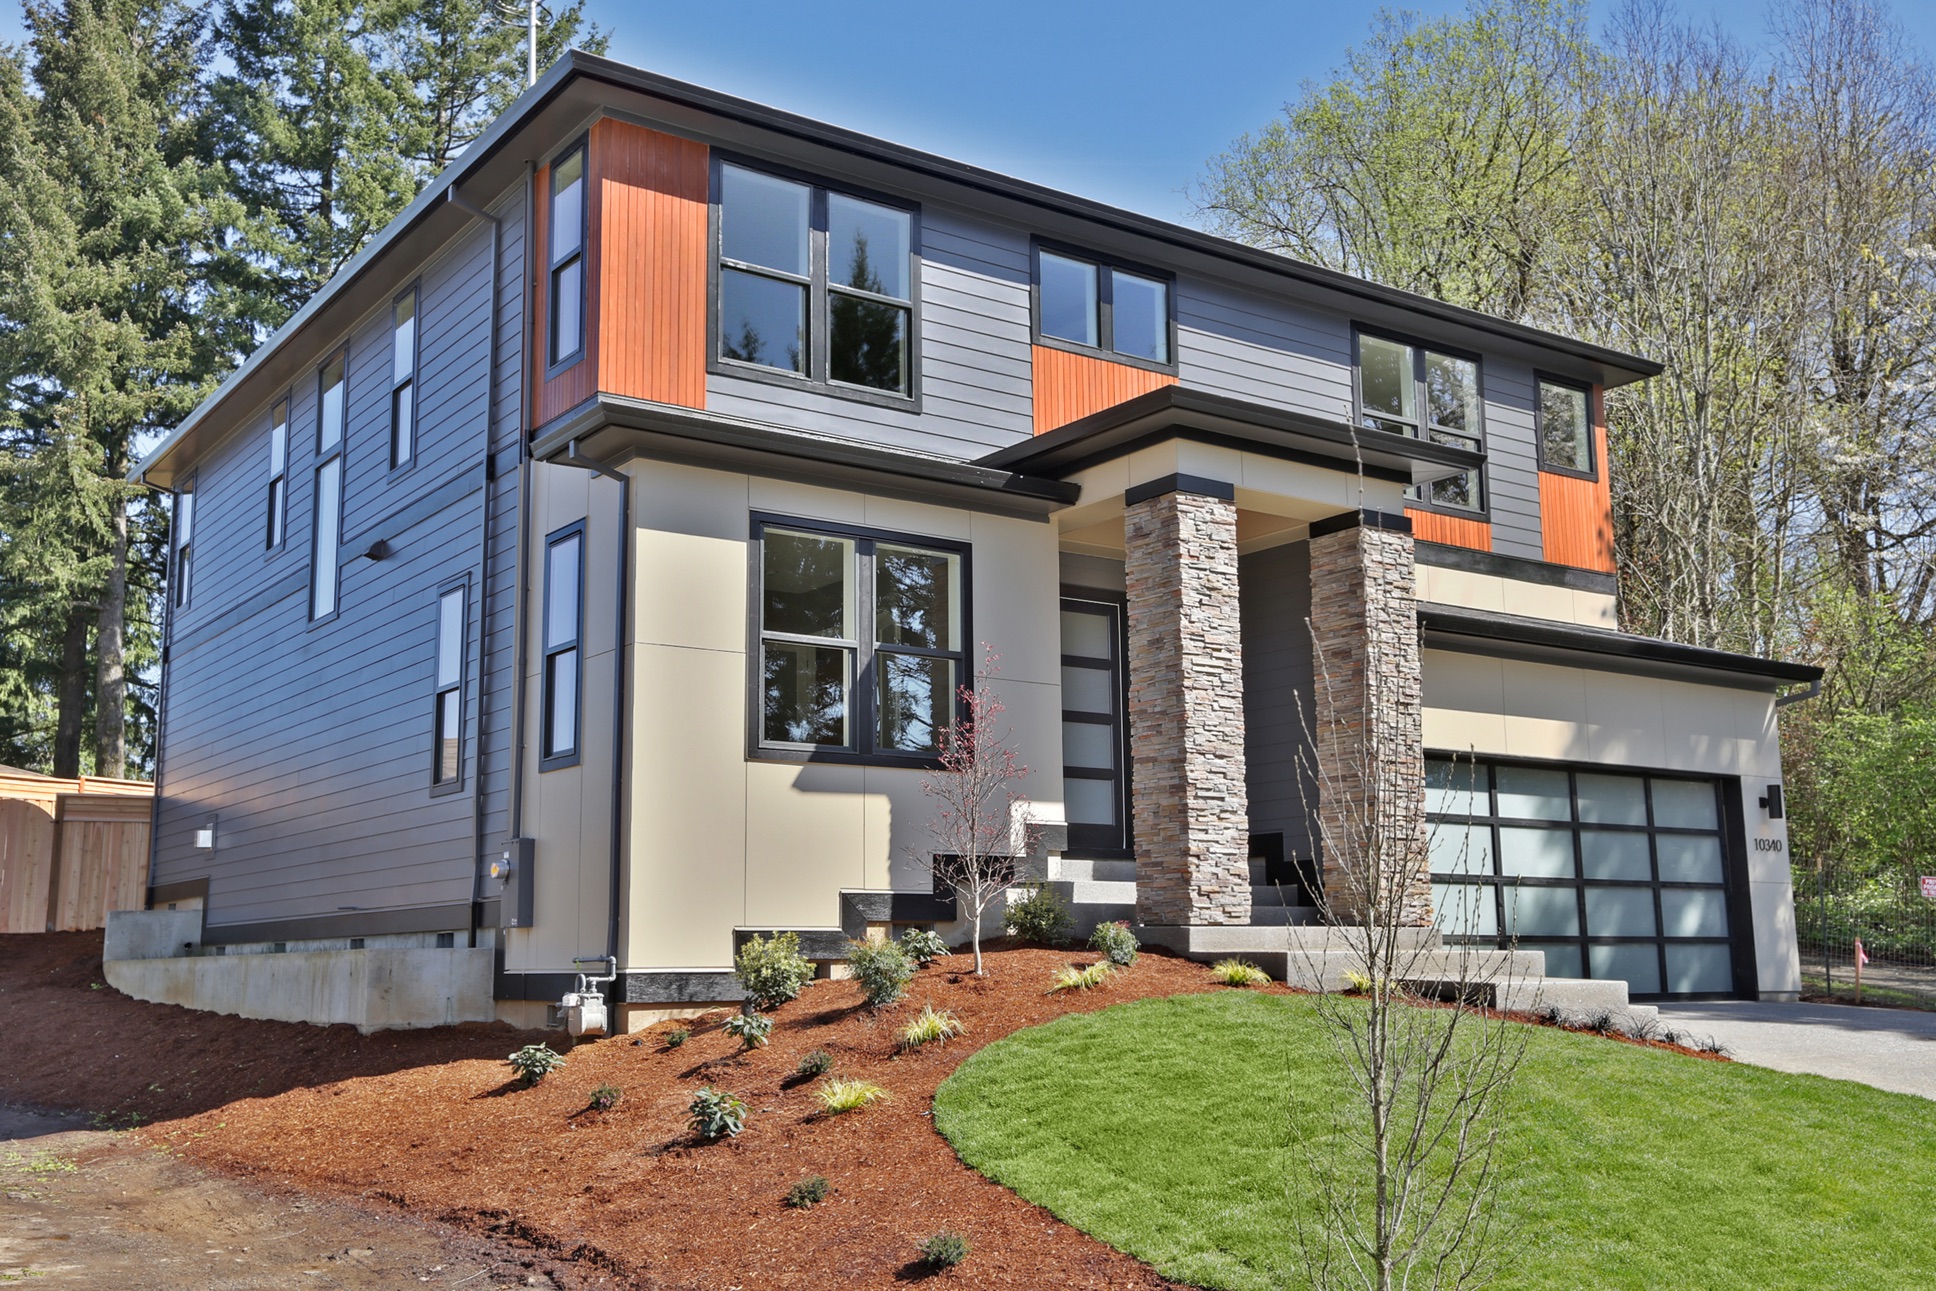 Build a custom home with Mainstreet development